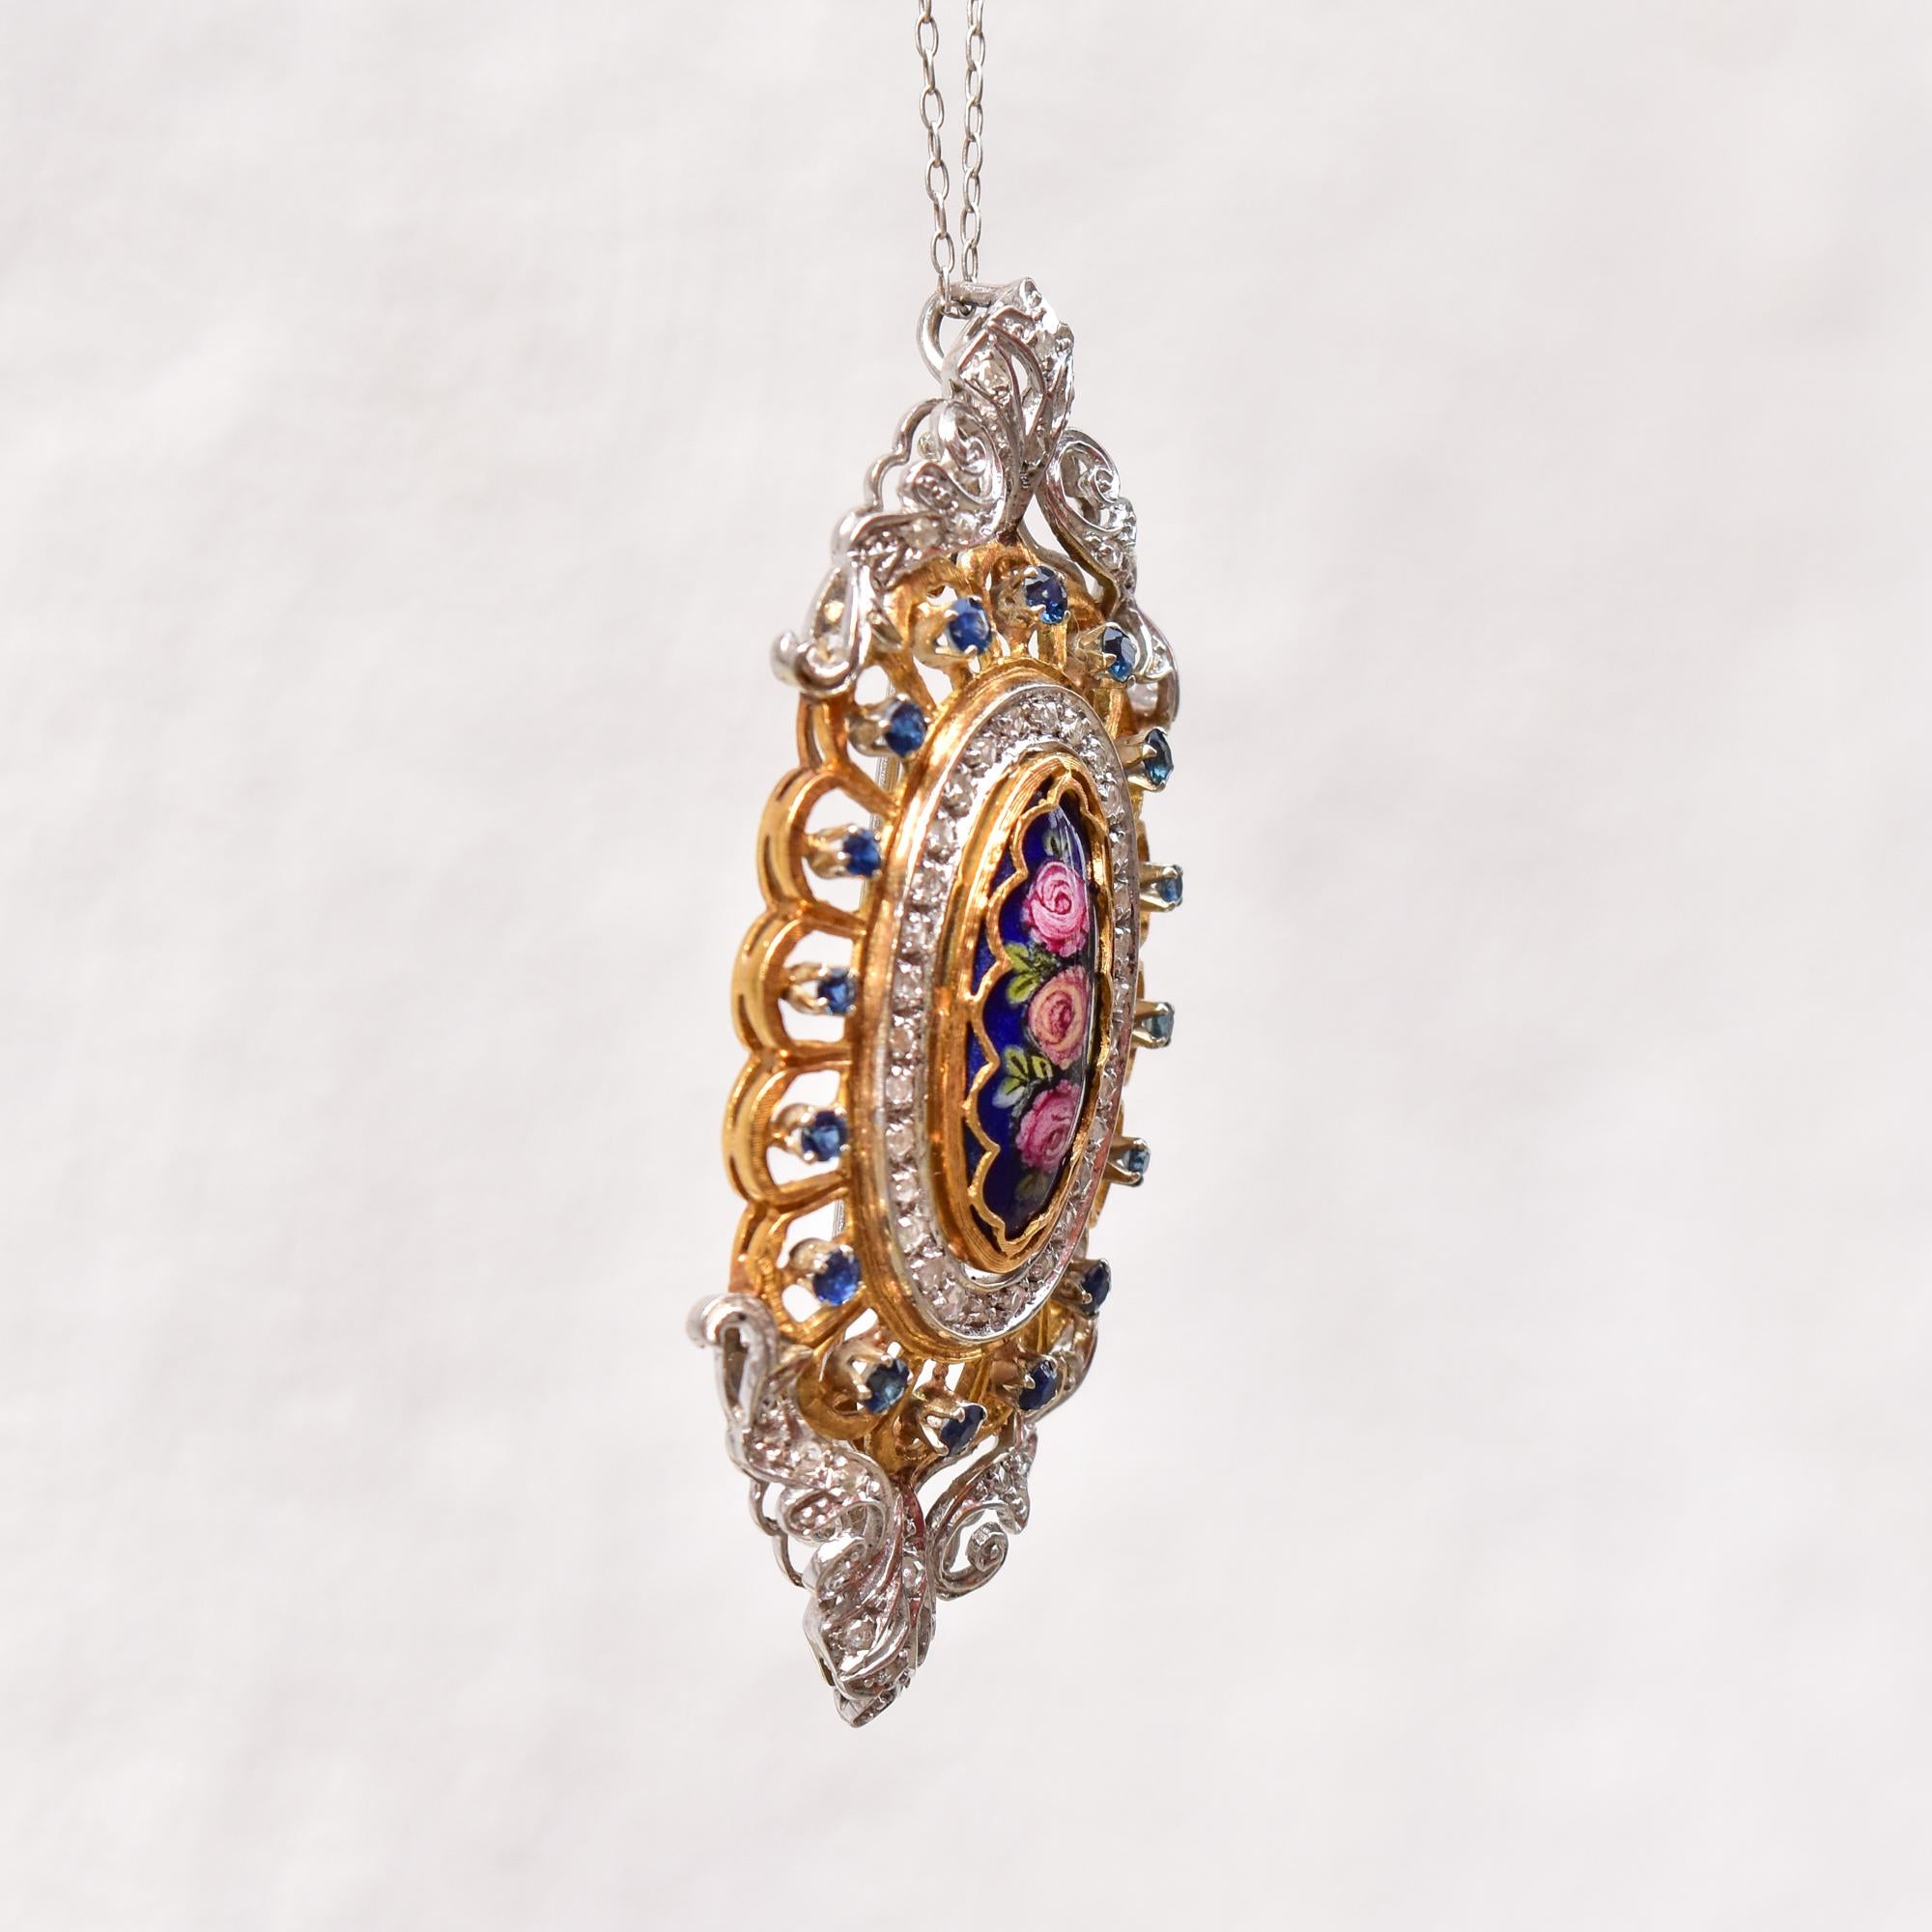 Toliro Italy 18K Diamond Encrusted Sapphire Enamel Flower Brooch Pendant In Good Condition For Sale In Philadelphia, PA